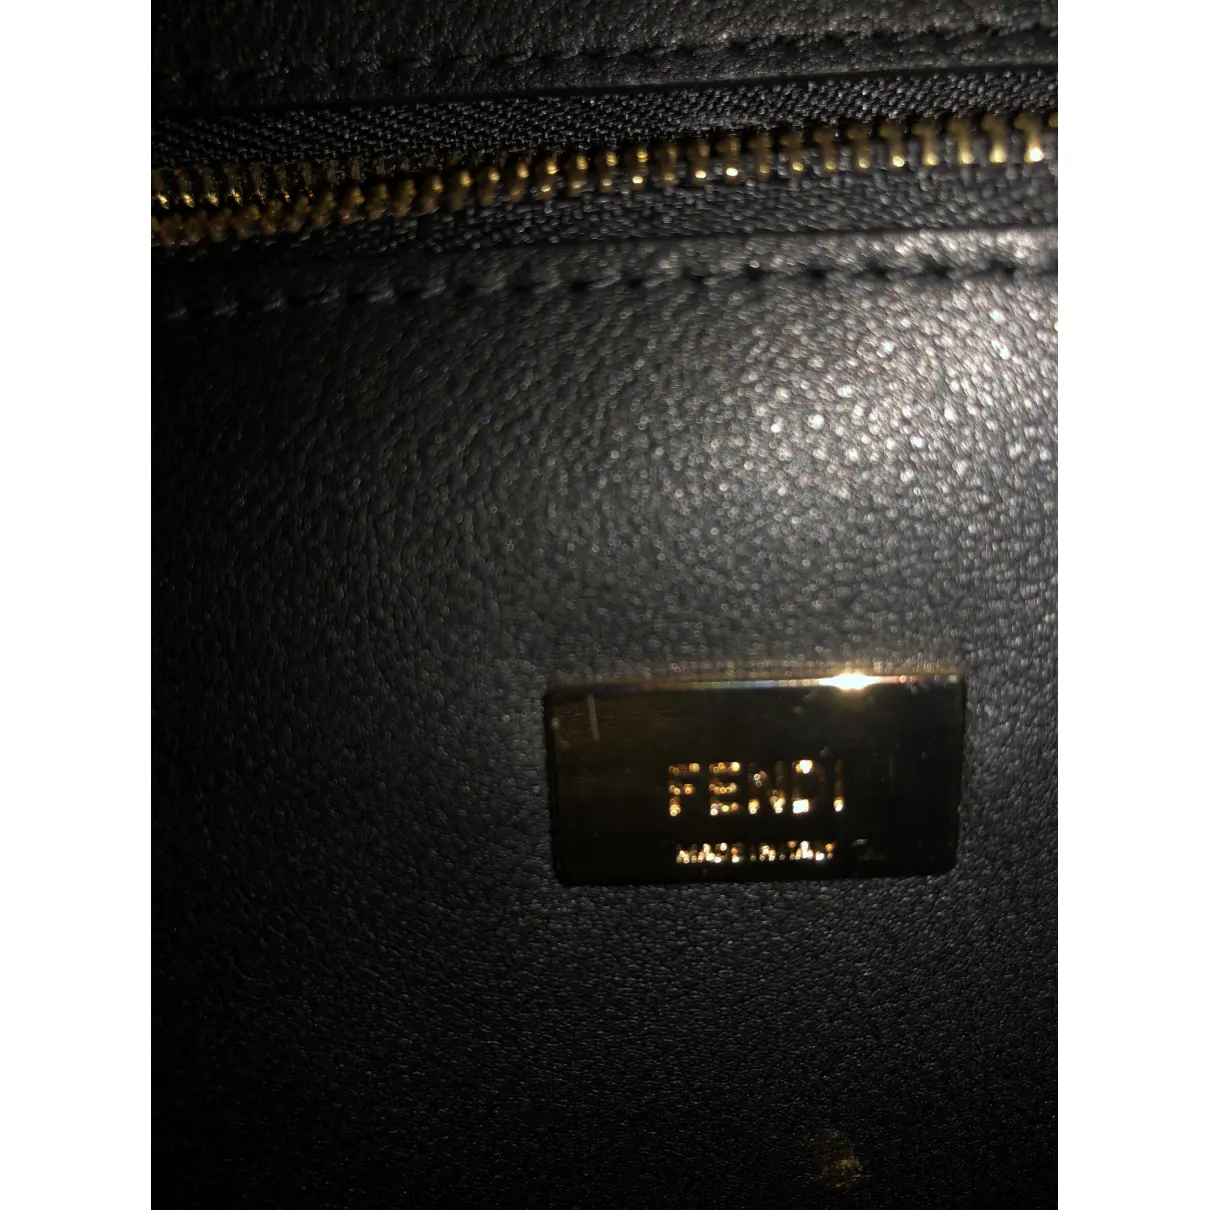 Peekaboo IseeU leather handbag Fendi